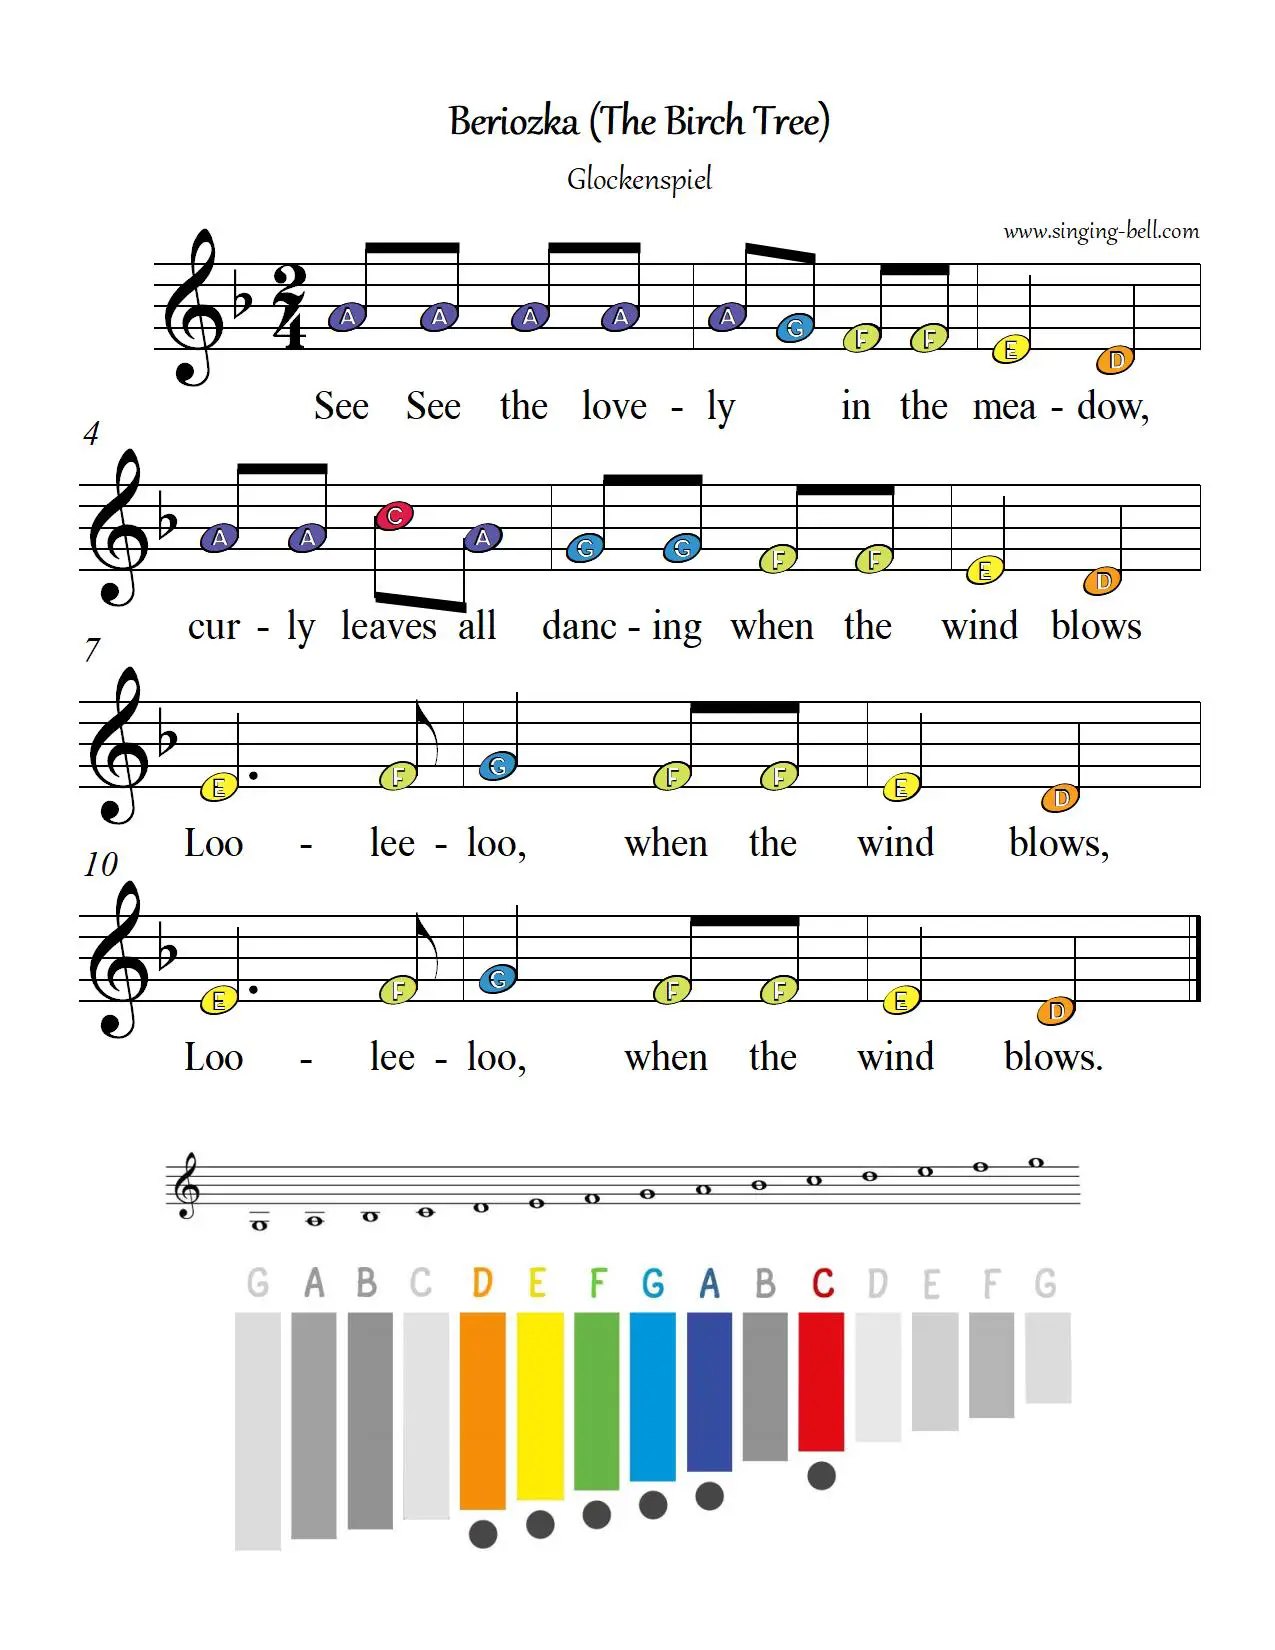 Beriozka The Birch Tree free xylophone glockenspiel sheet music color notes chart pdf